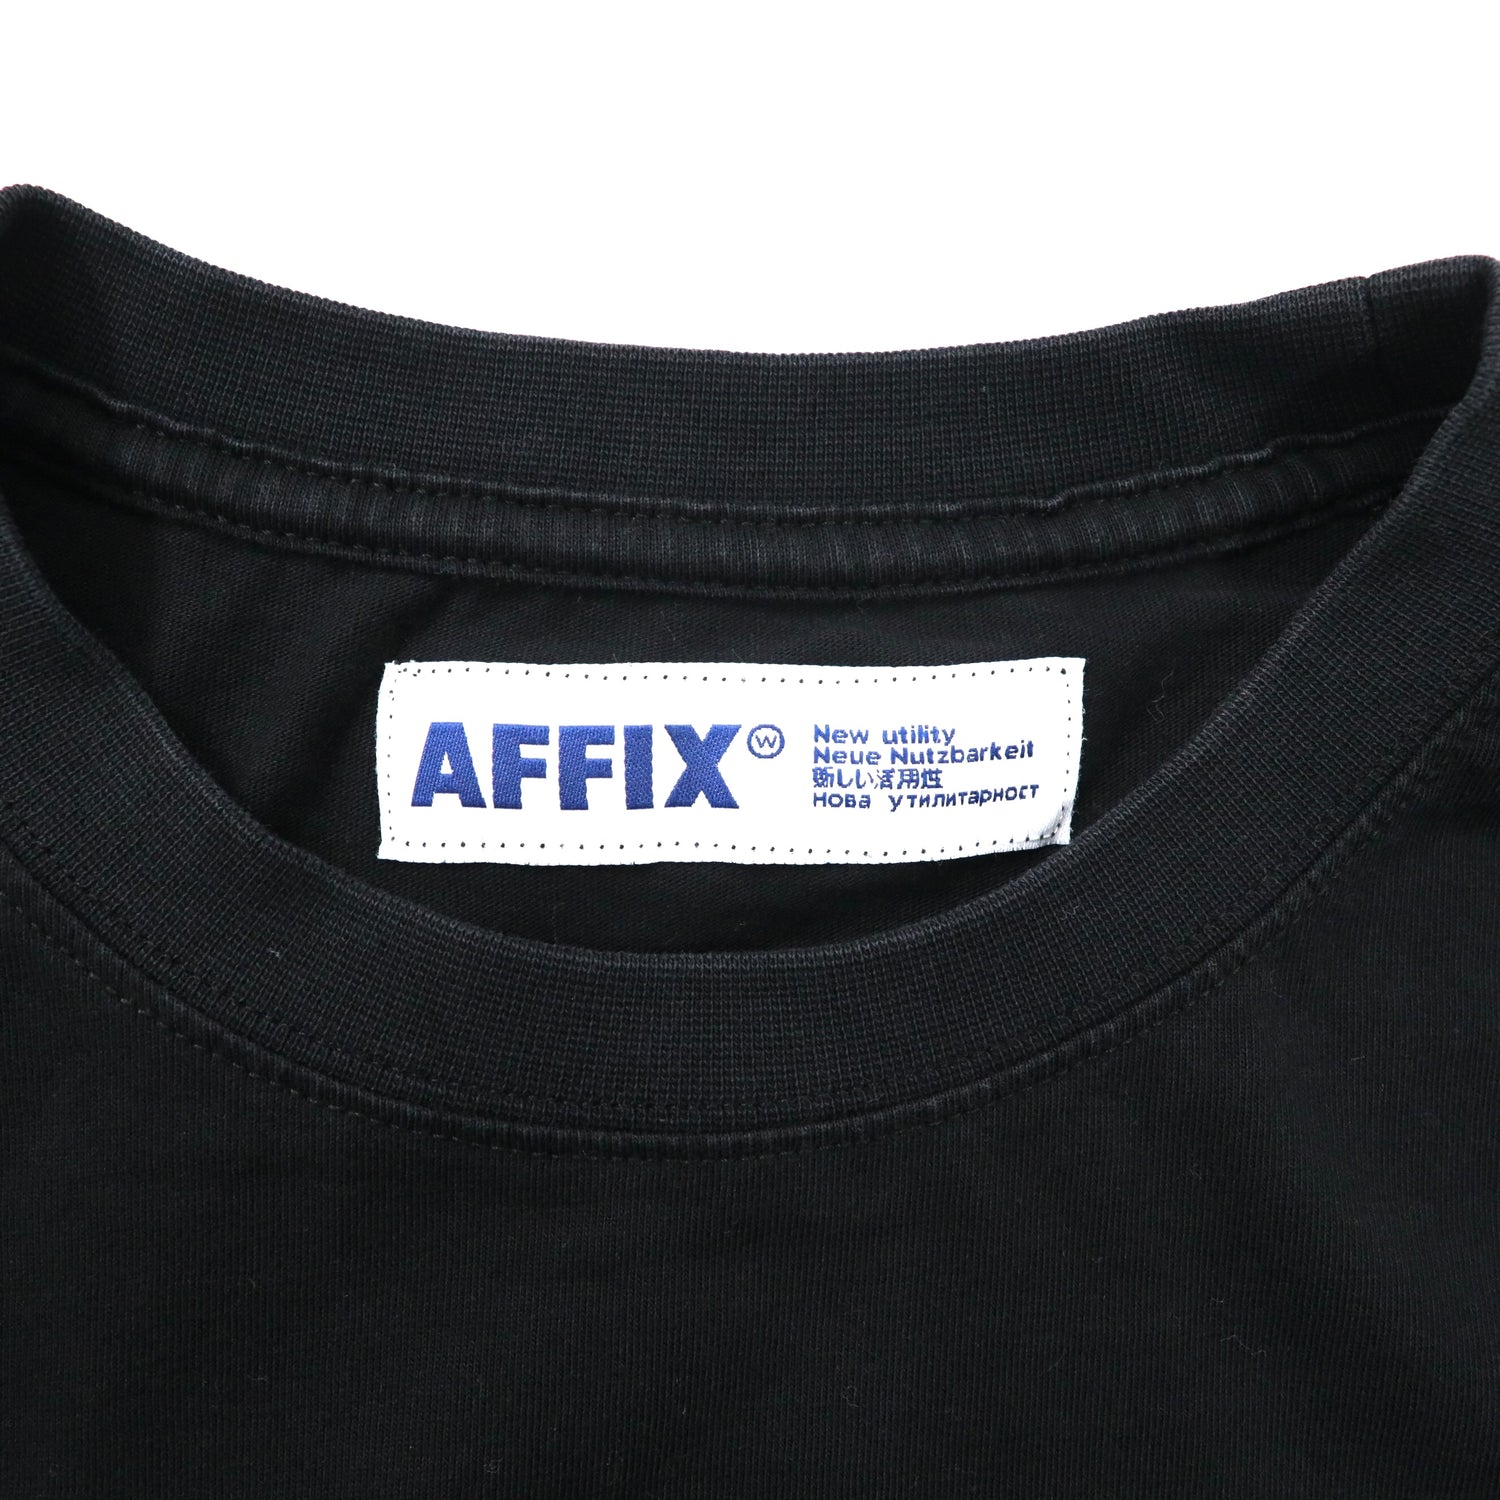 Affix wrks long-sleeved t-shirtsサイズL